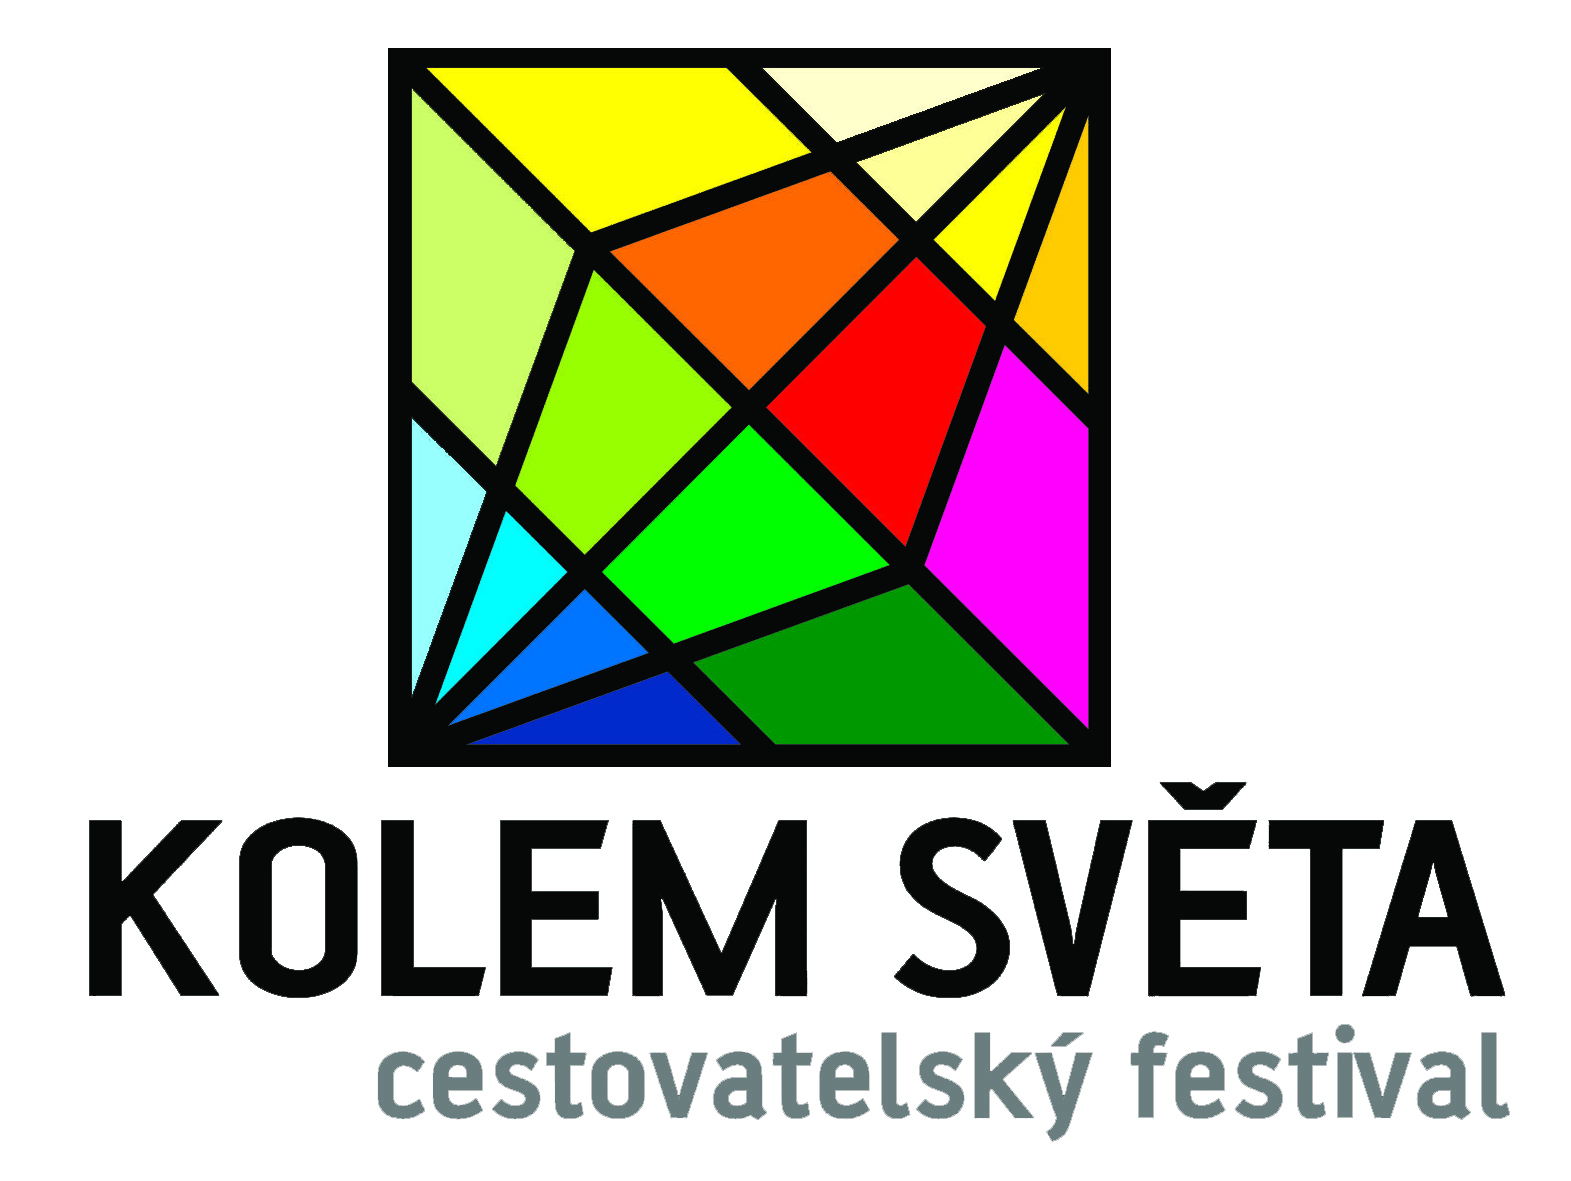 Alpenverein oeav.cz Festival KOLEM SVĚTA